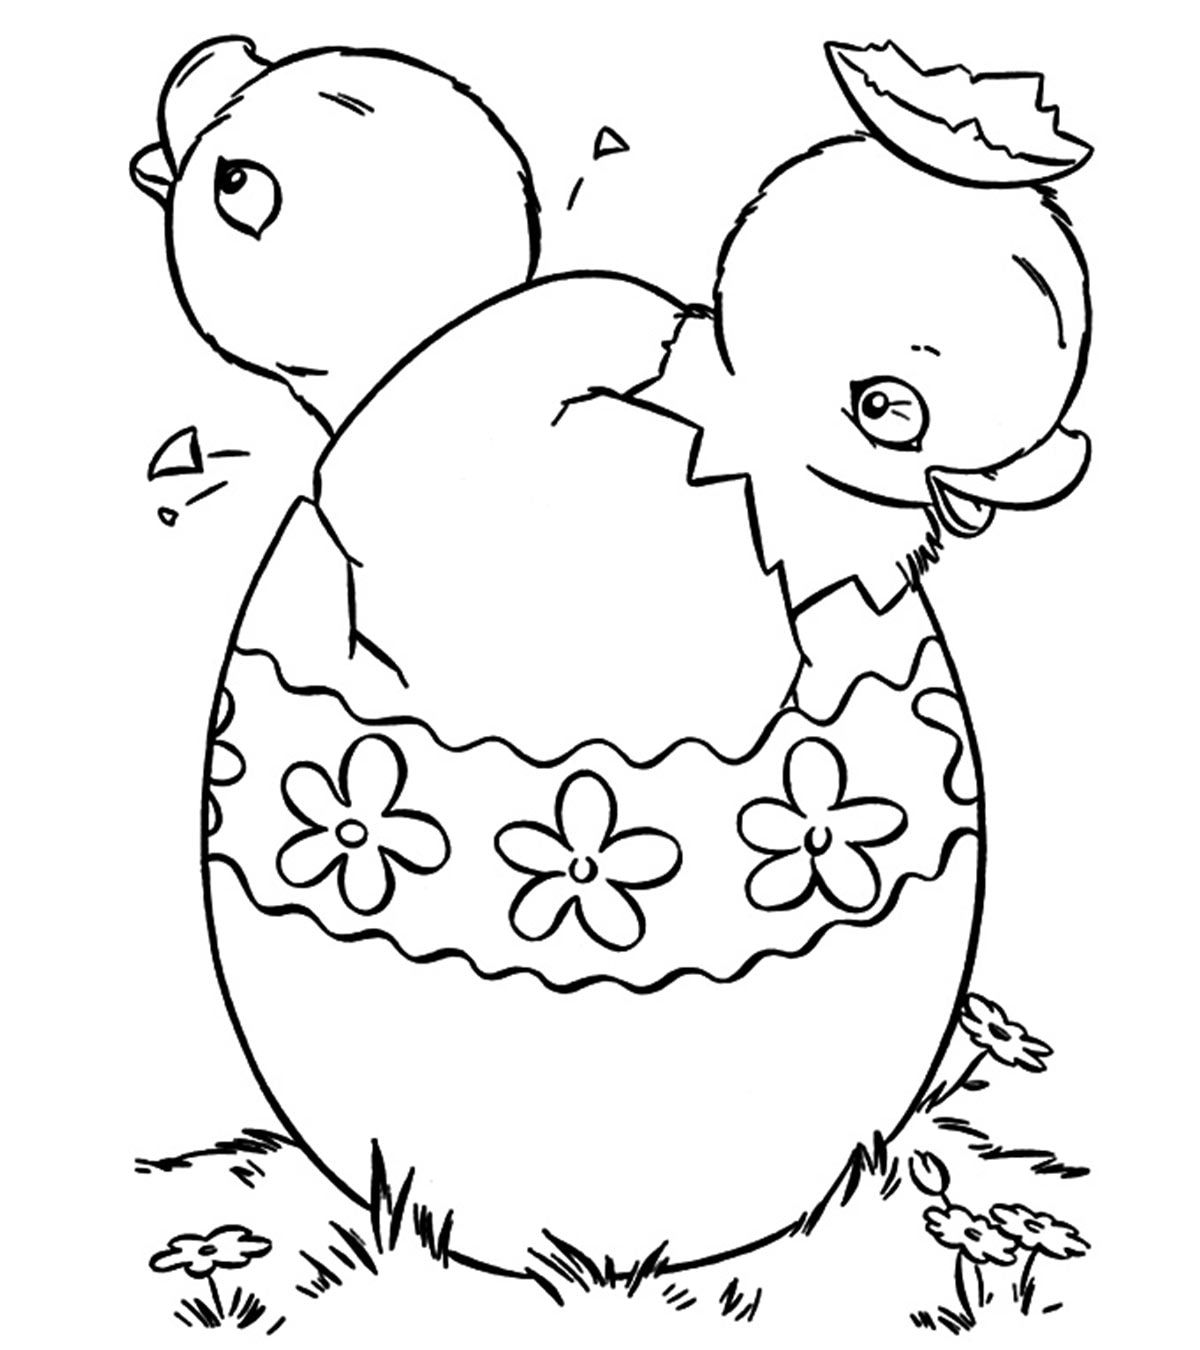 Coloring Pages For Kids Easter Egg Smart kiddy blogspot